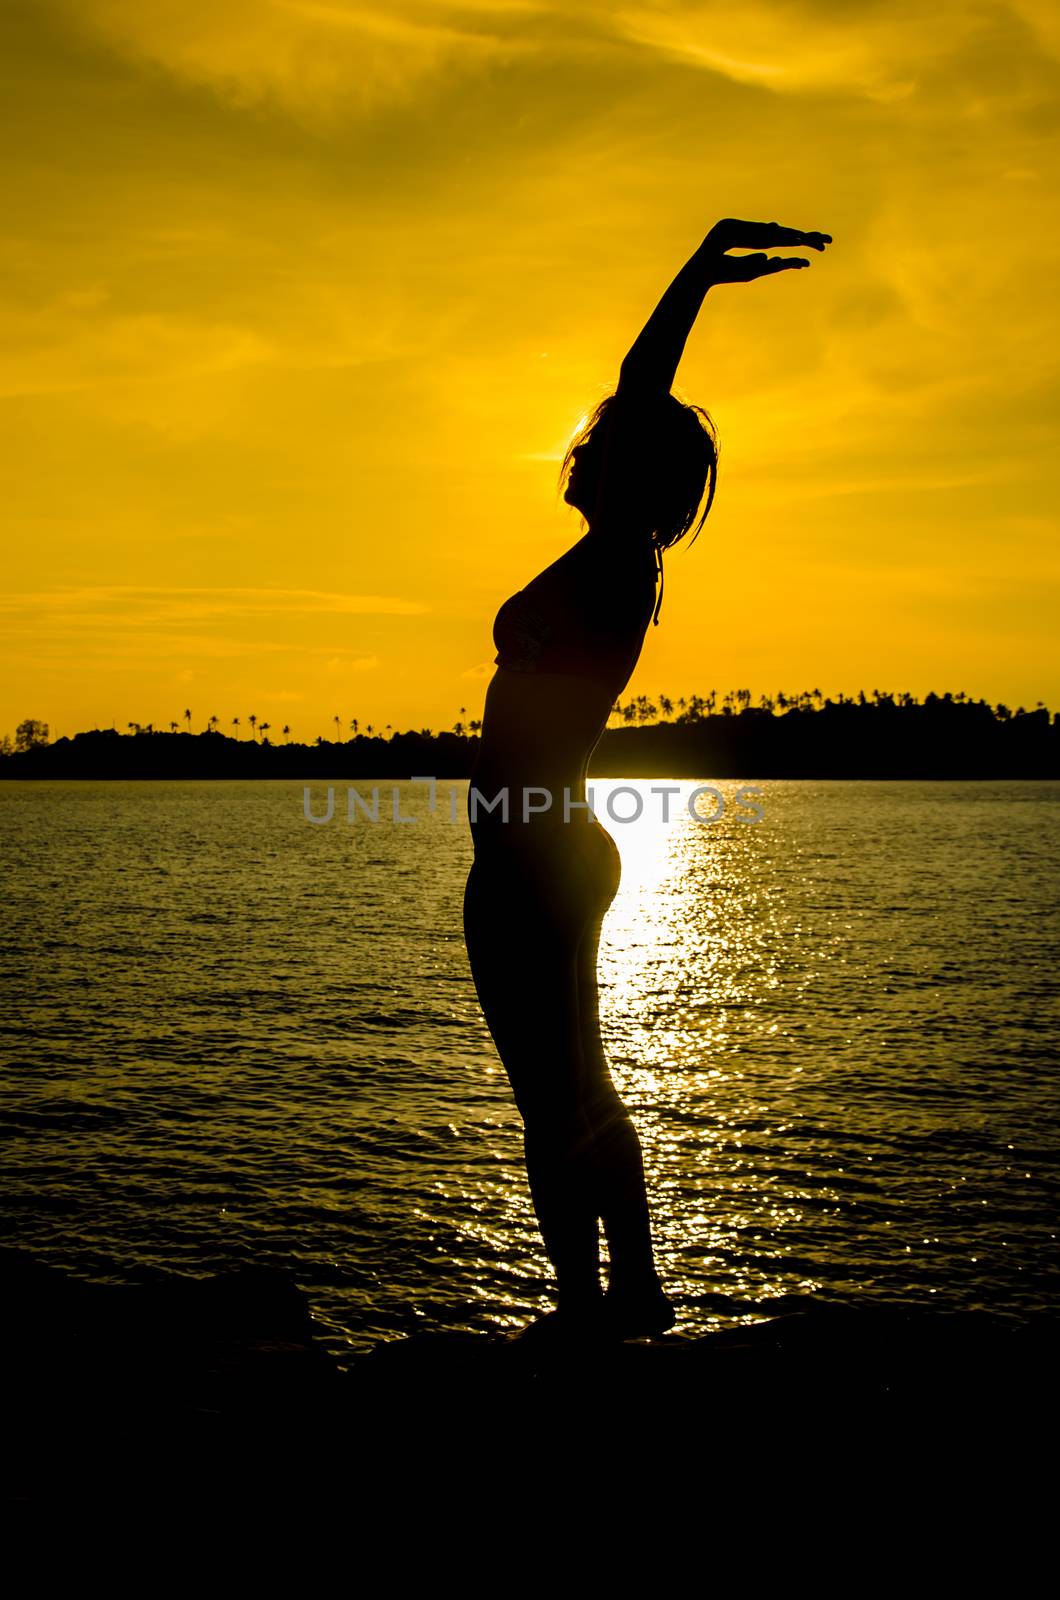 Woman Silhouette sea by aoo3771